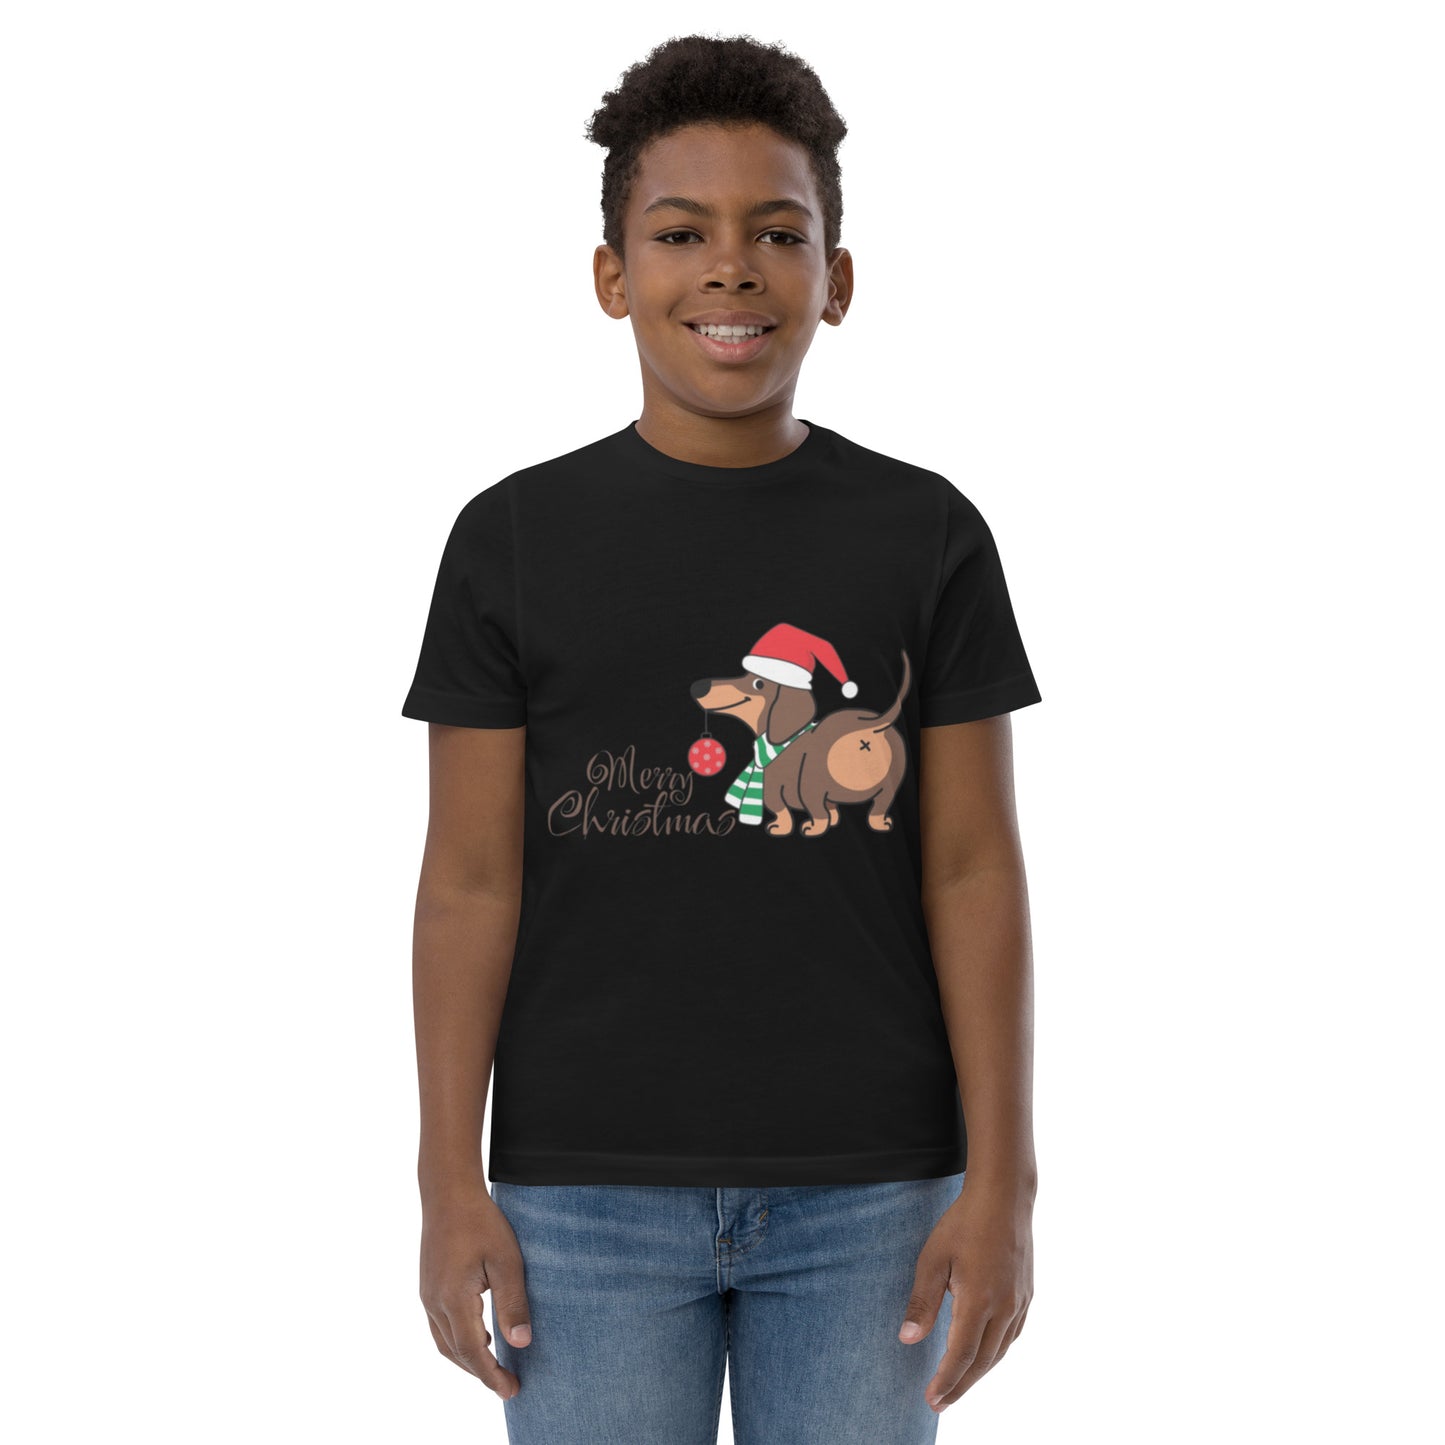 Dachshund Christmas Youth jersey t-shirt